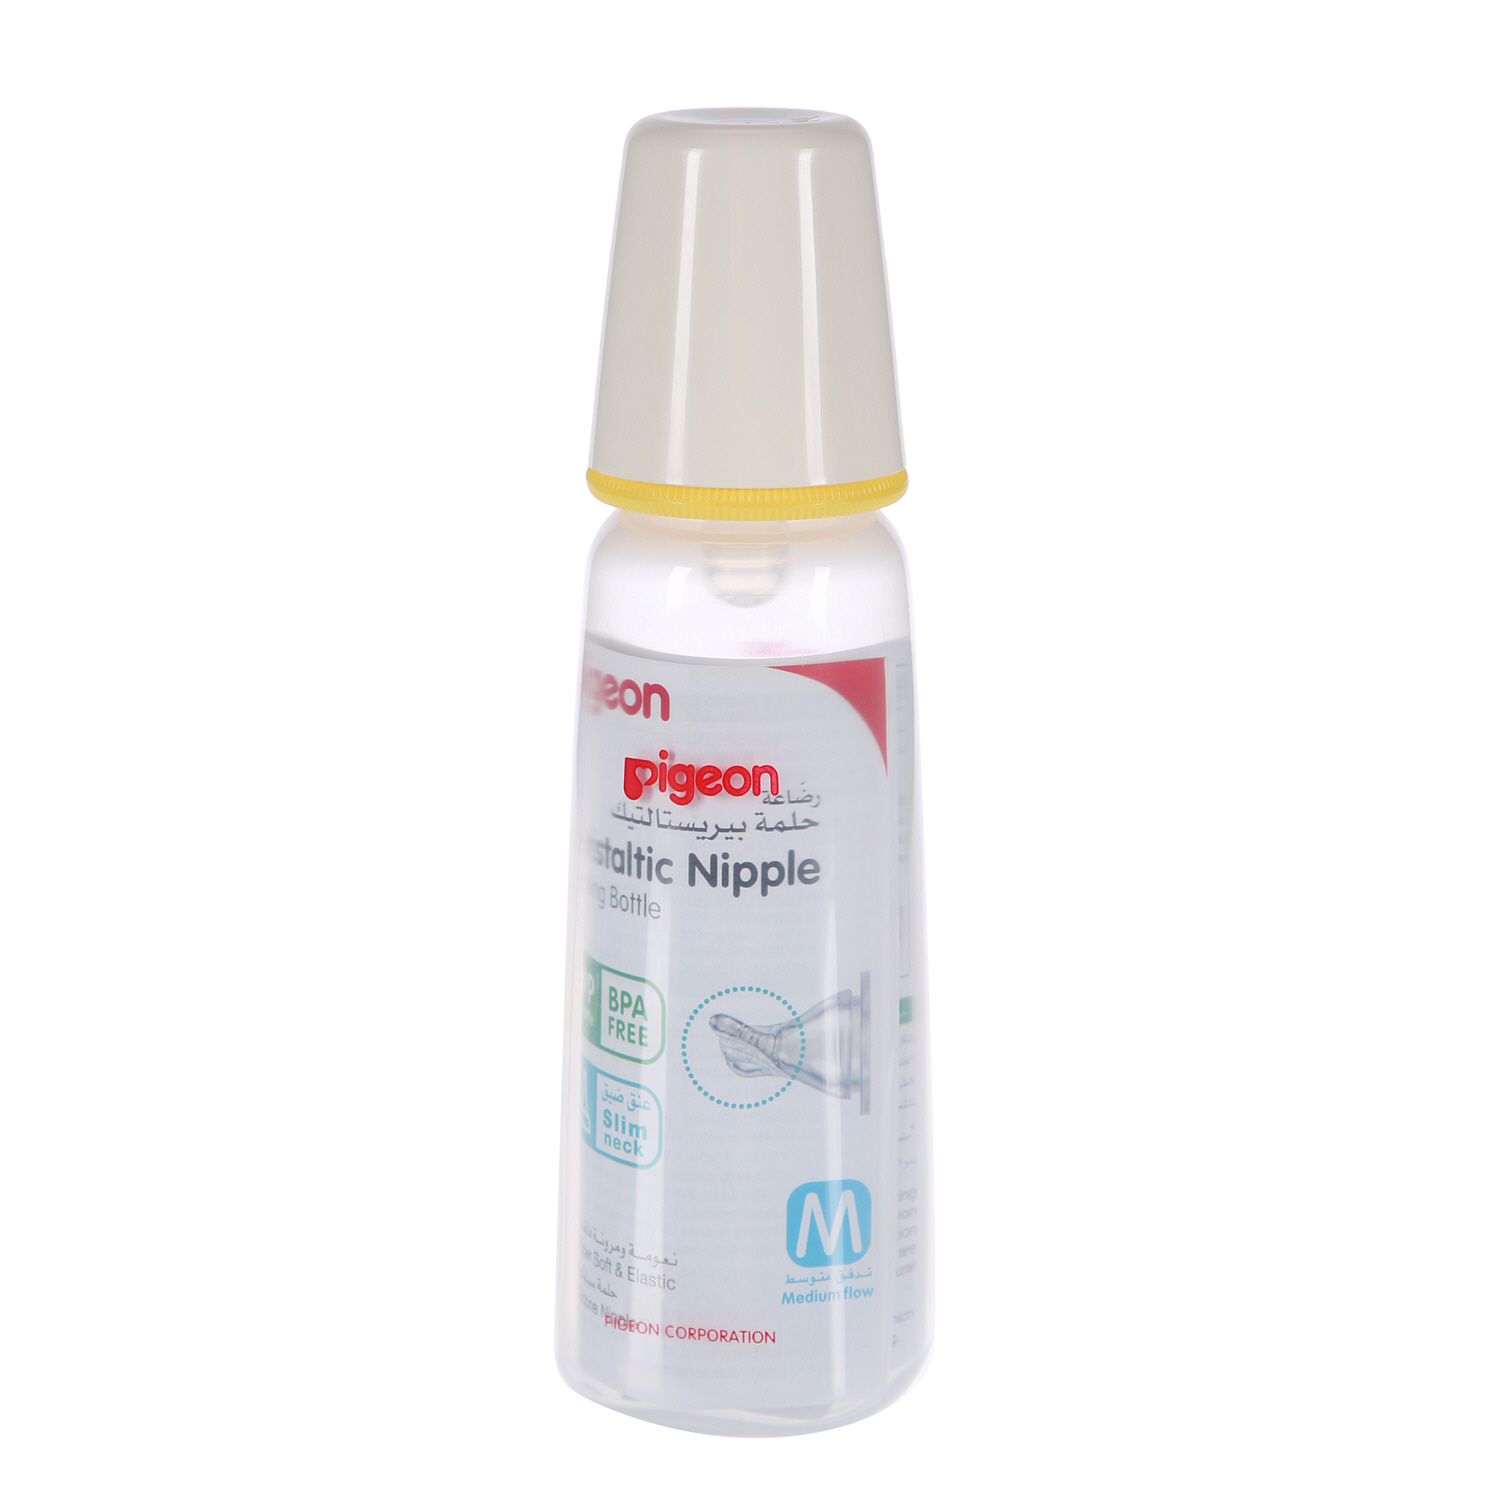 Pigeon KPP Standard Neck Nursing Bottle 240 ml